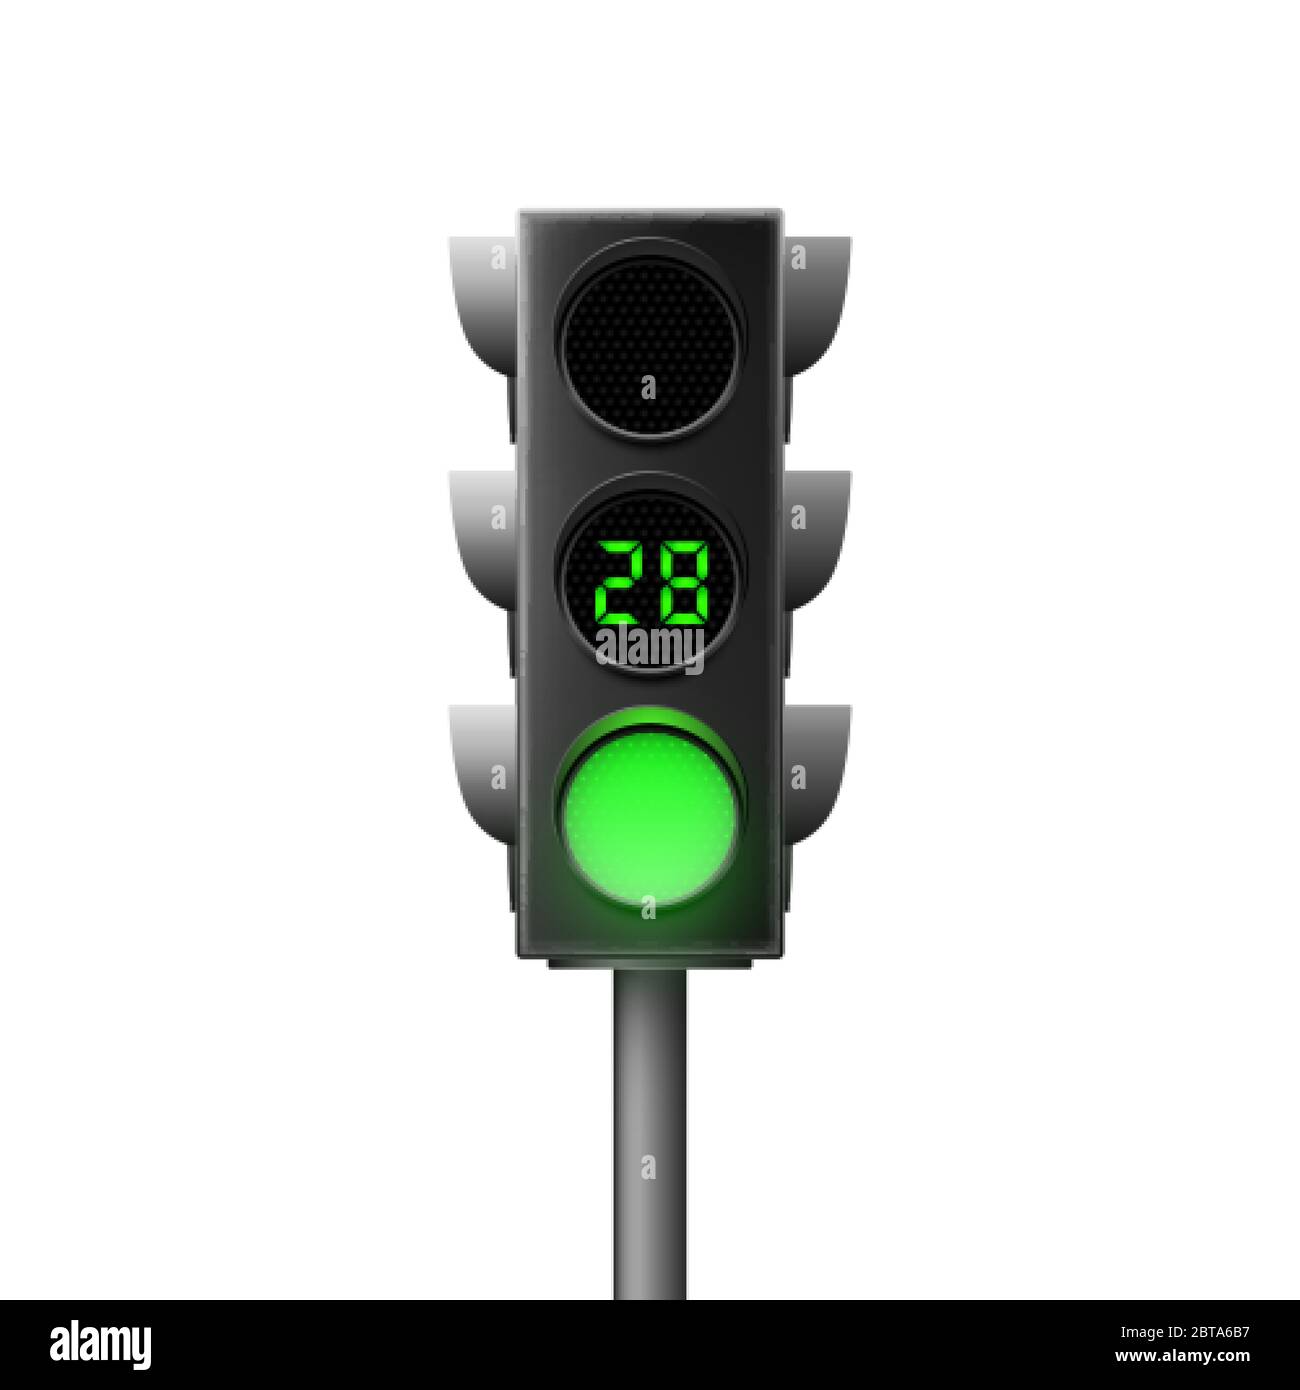 Semaforo stradale con luce verde Stock Photo